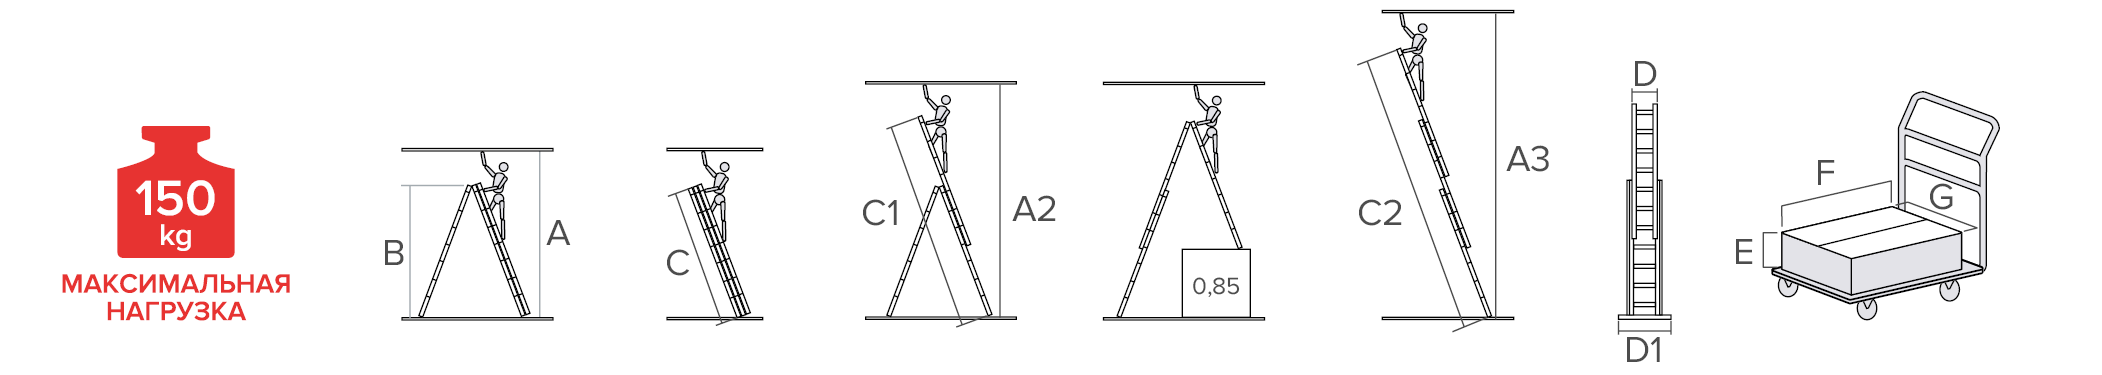 Schema: Three-section aluminum professional multipurpose reinforced ladder NV3231